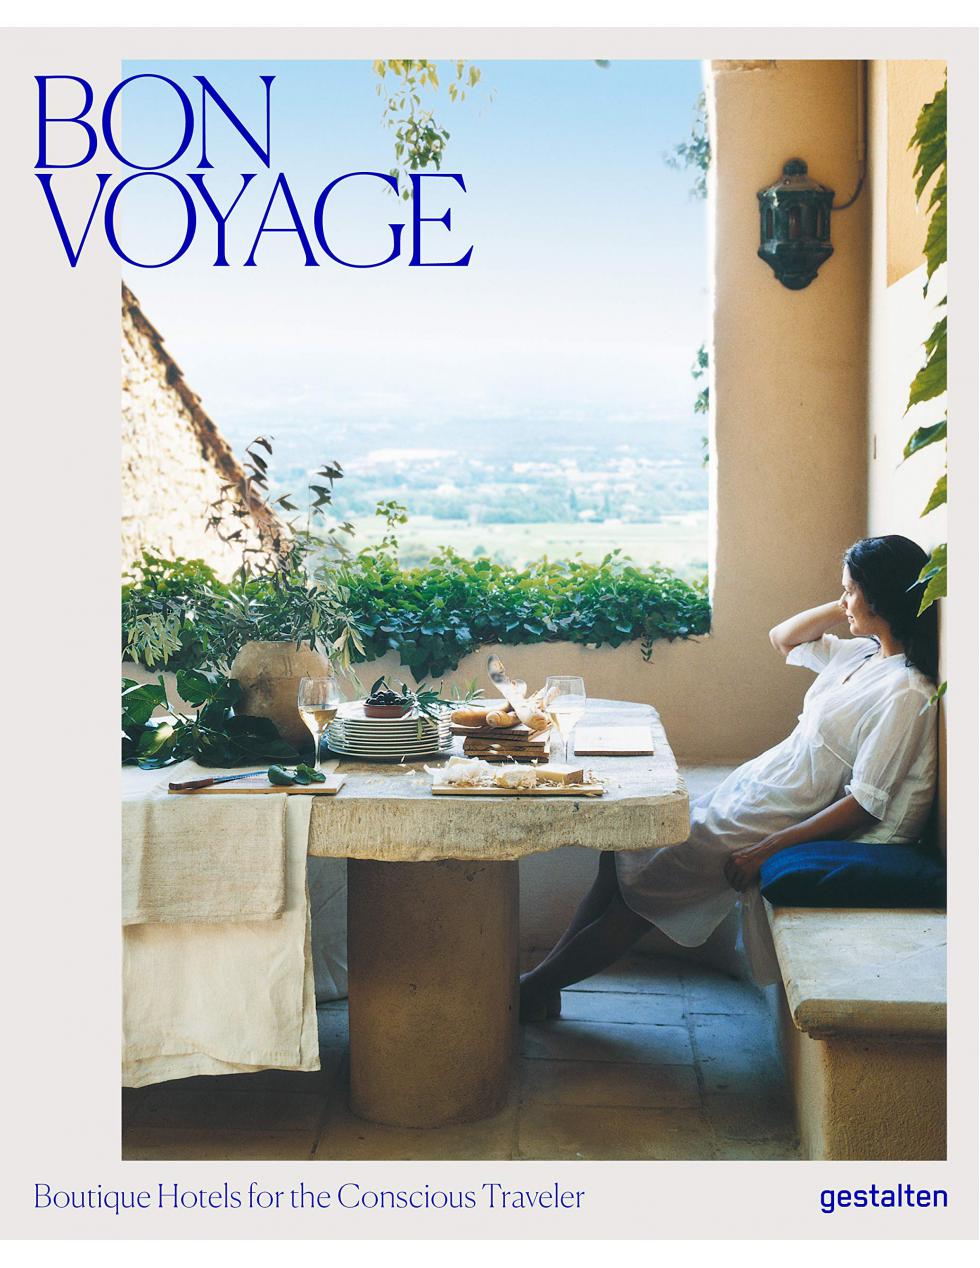 bon voyage boutique hotels for the conscious traveler